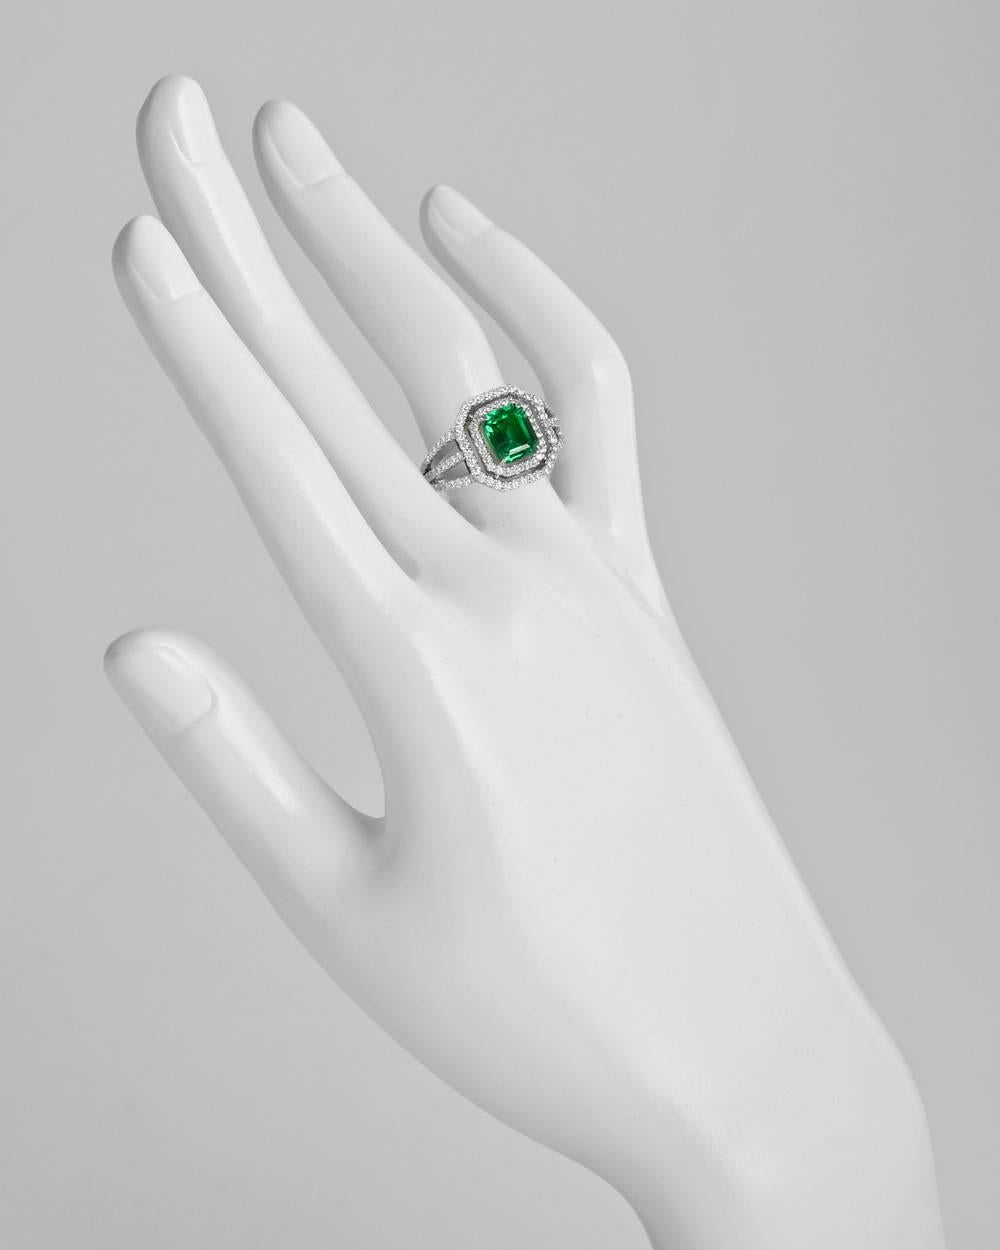 Emerald Cut 1.49 Carat No-Oil Emerald Diamond Ring